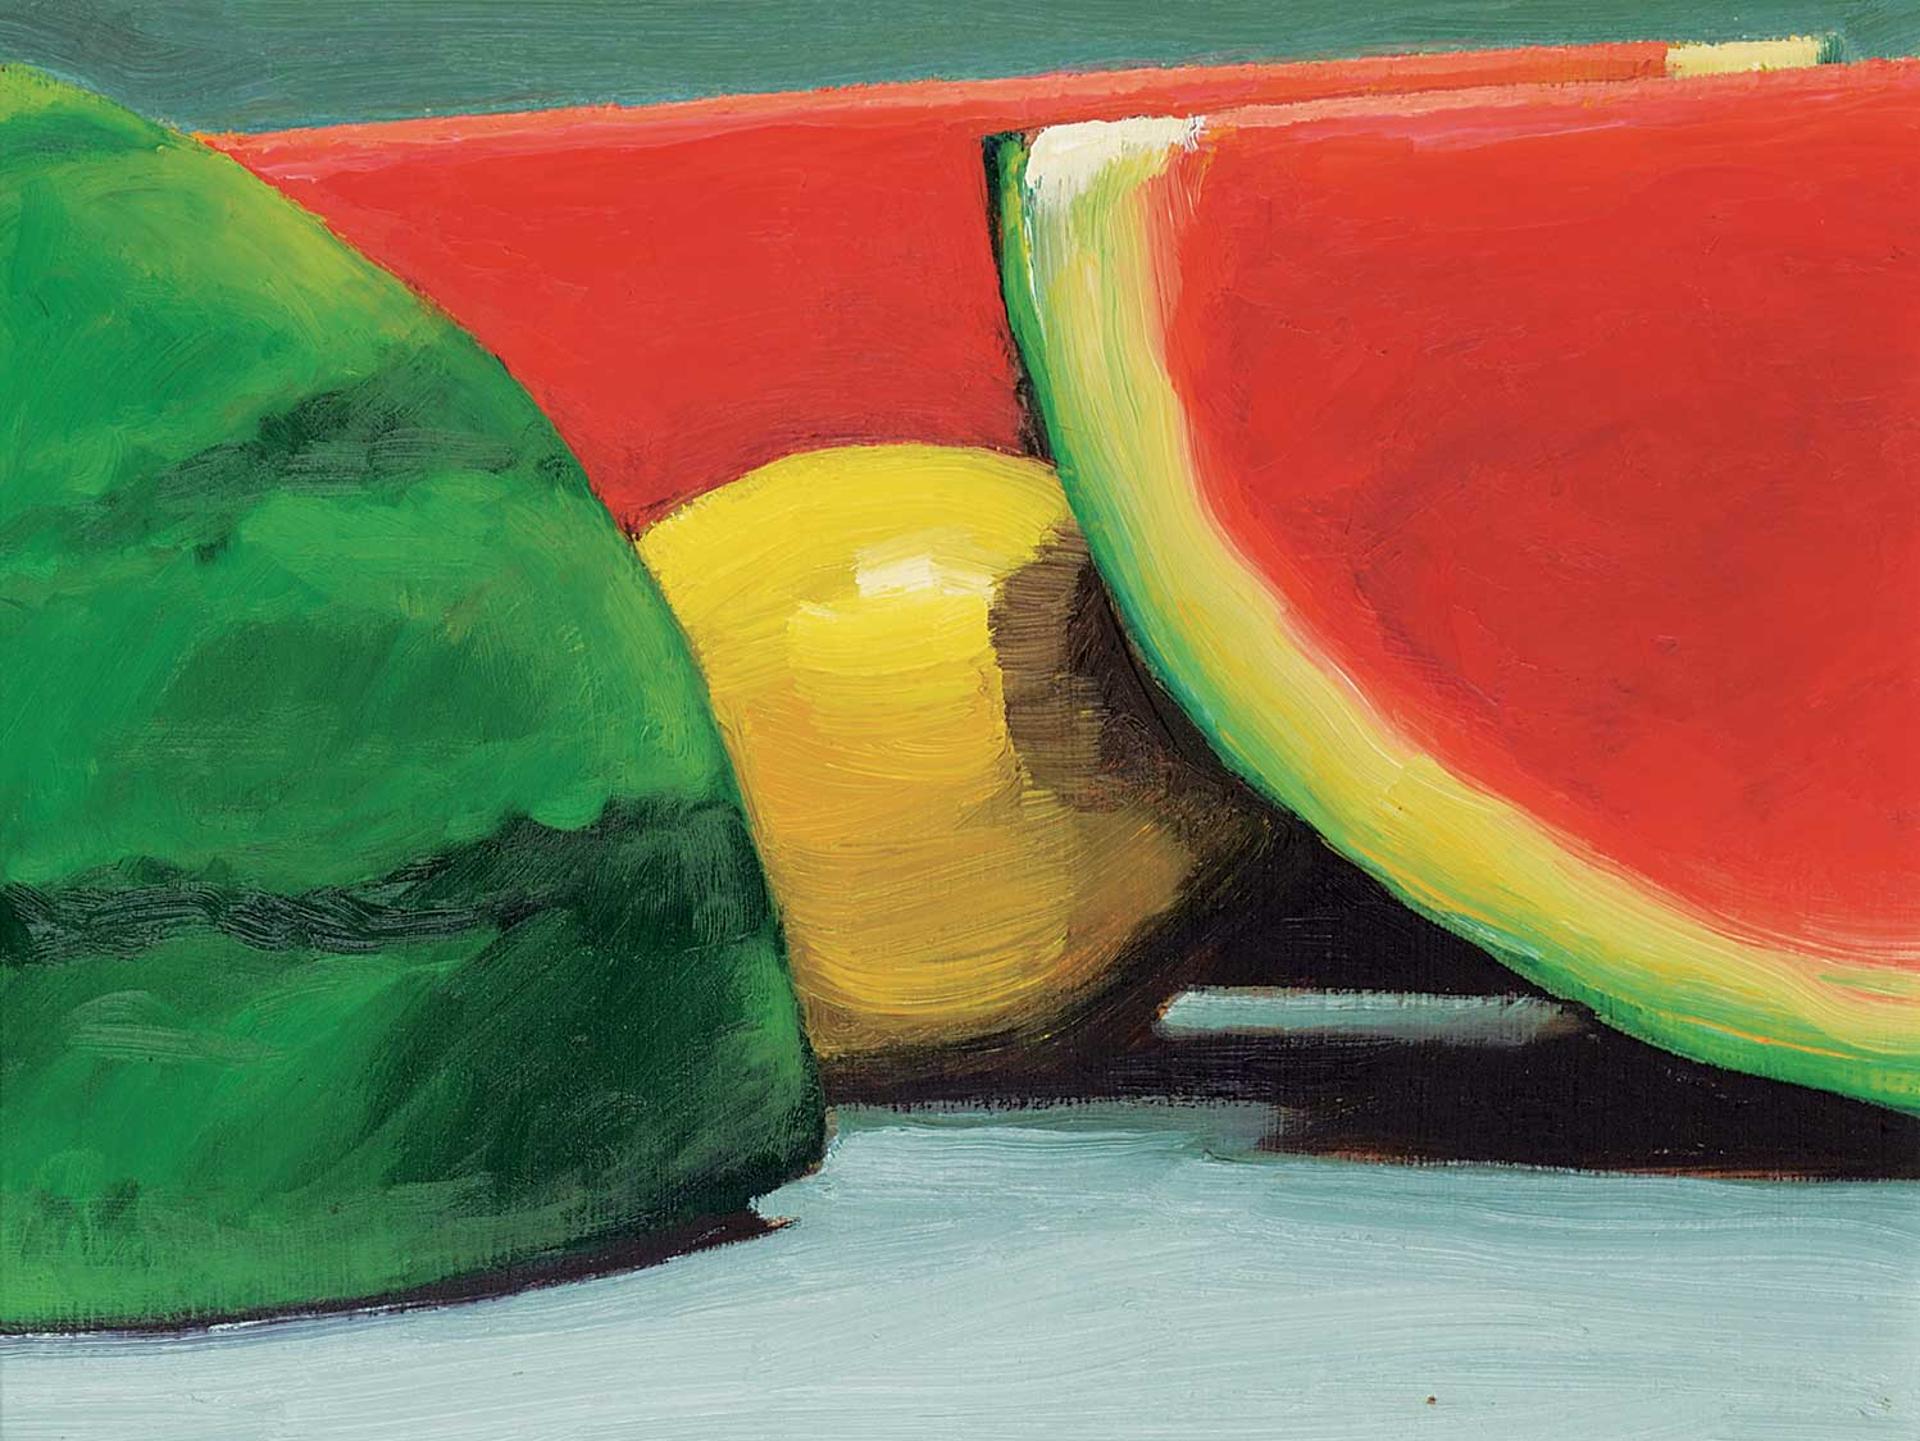 Les Thomas (1962) - Watermelon Slices and Lemon